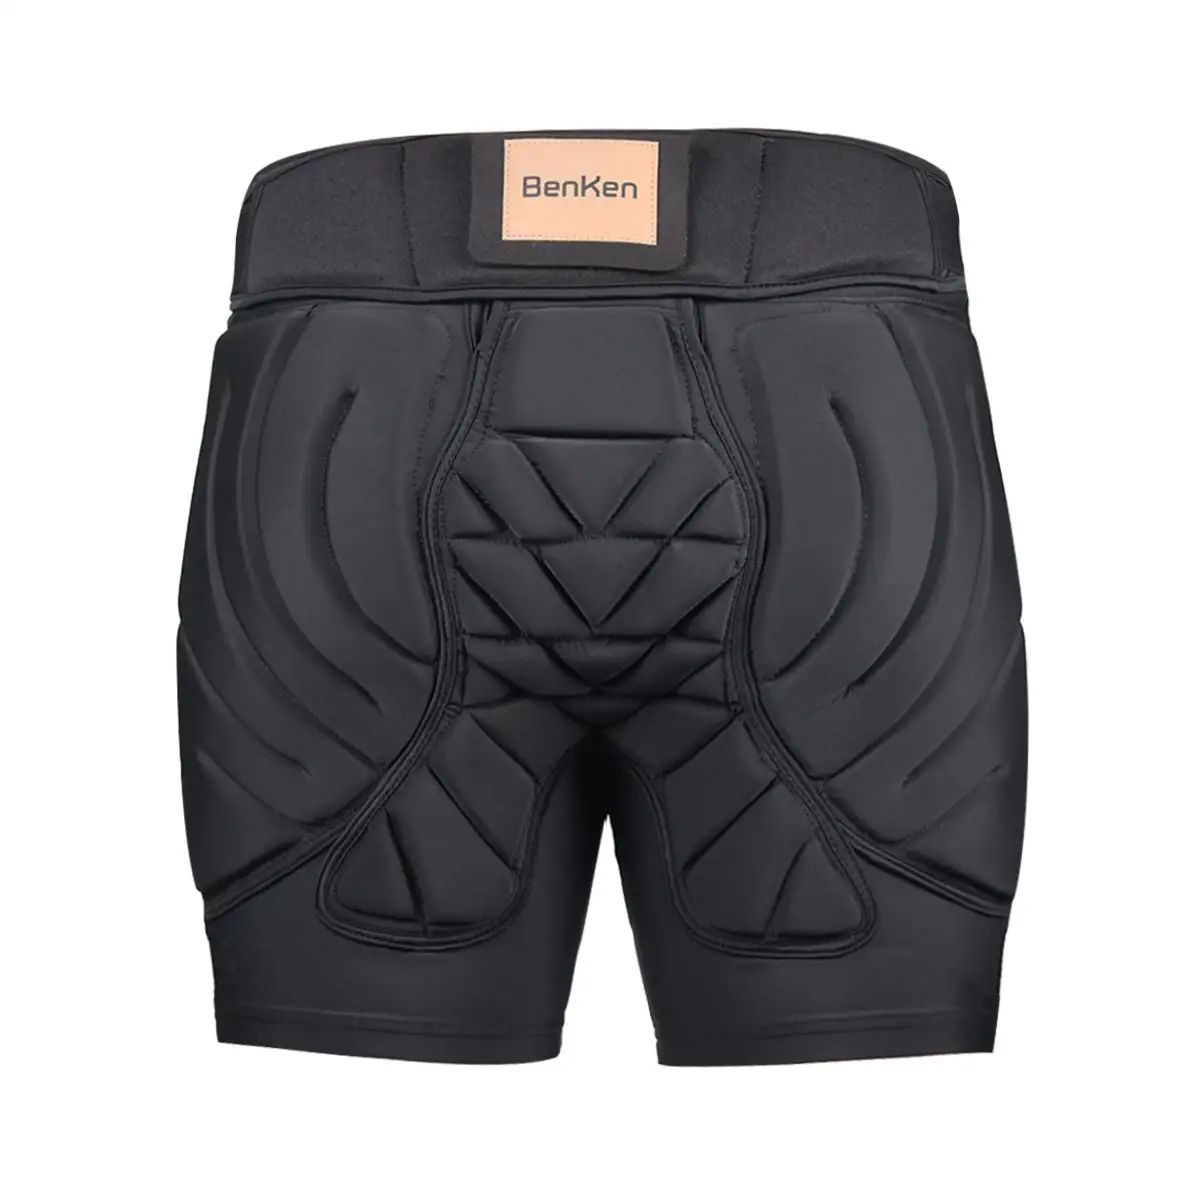 Padded Shorts 3D Protection Hip Butt EVA Protective Pad Short Pants Gear Guard for Ski Skate Cycling Men Women 